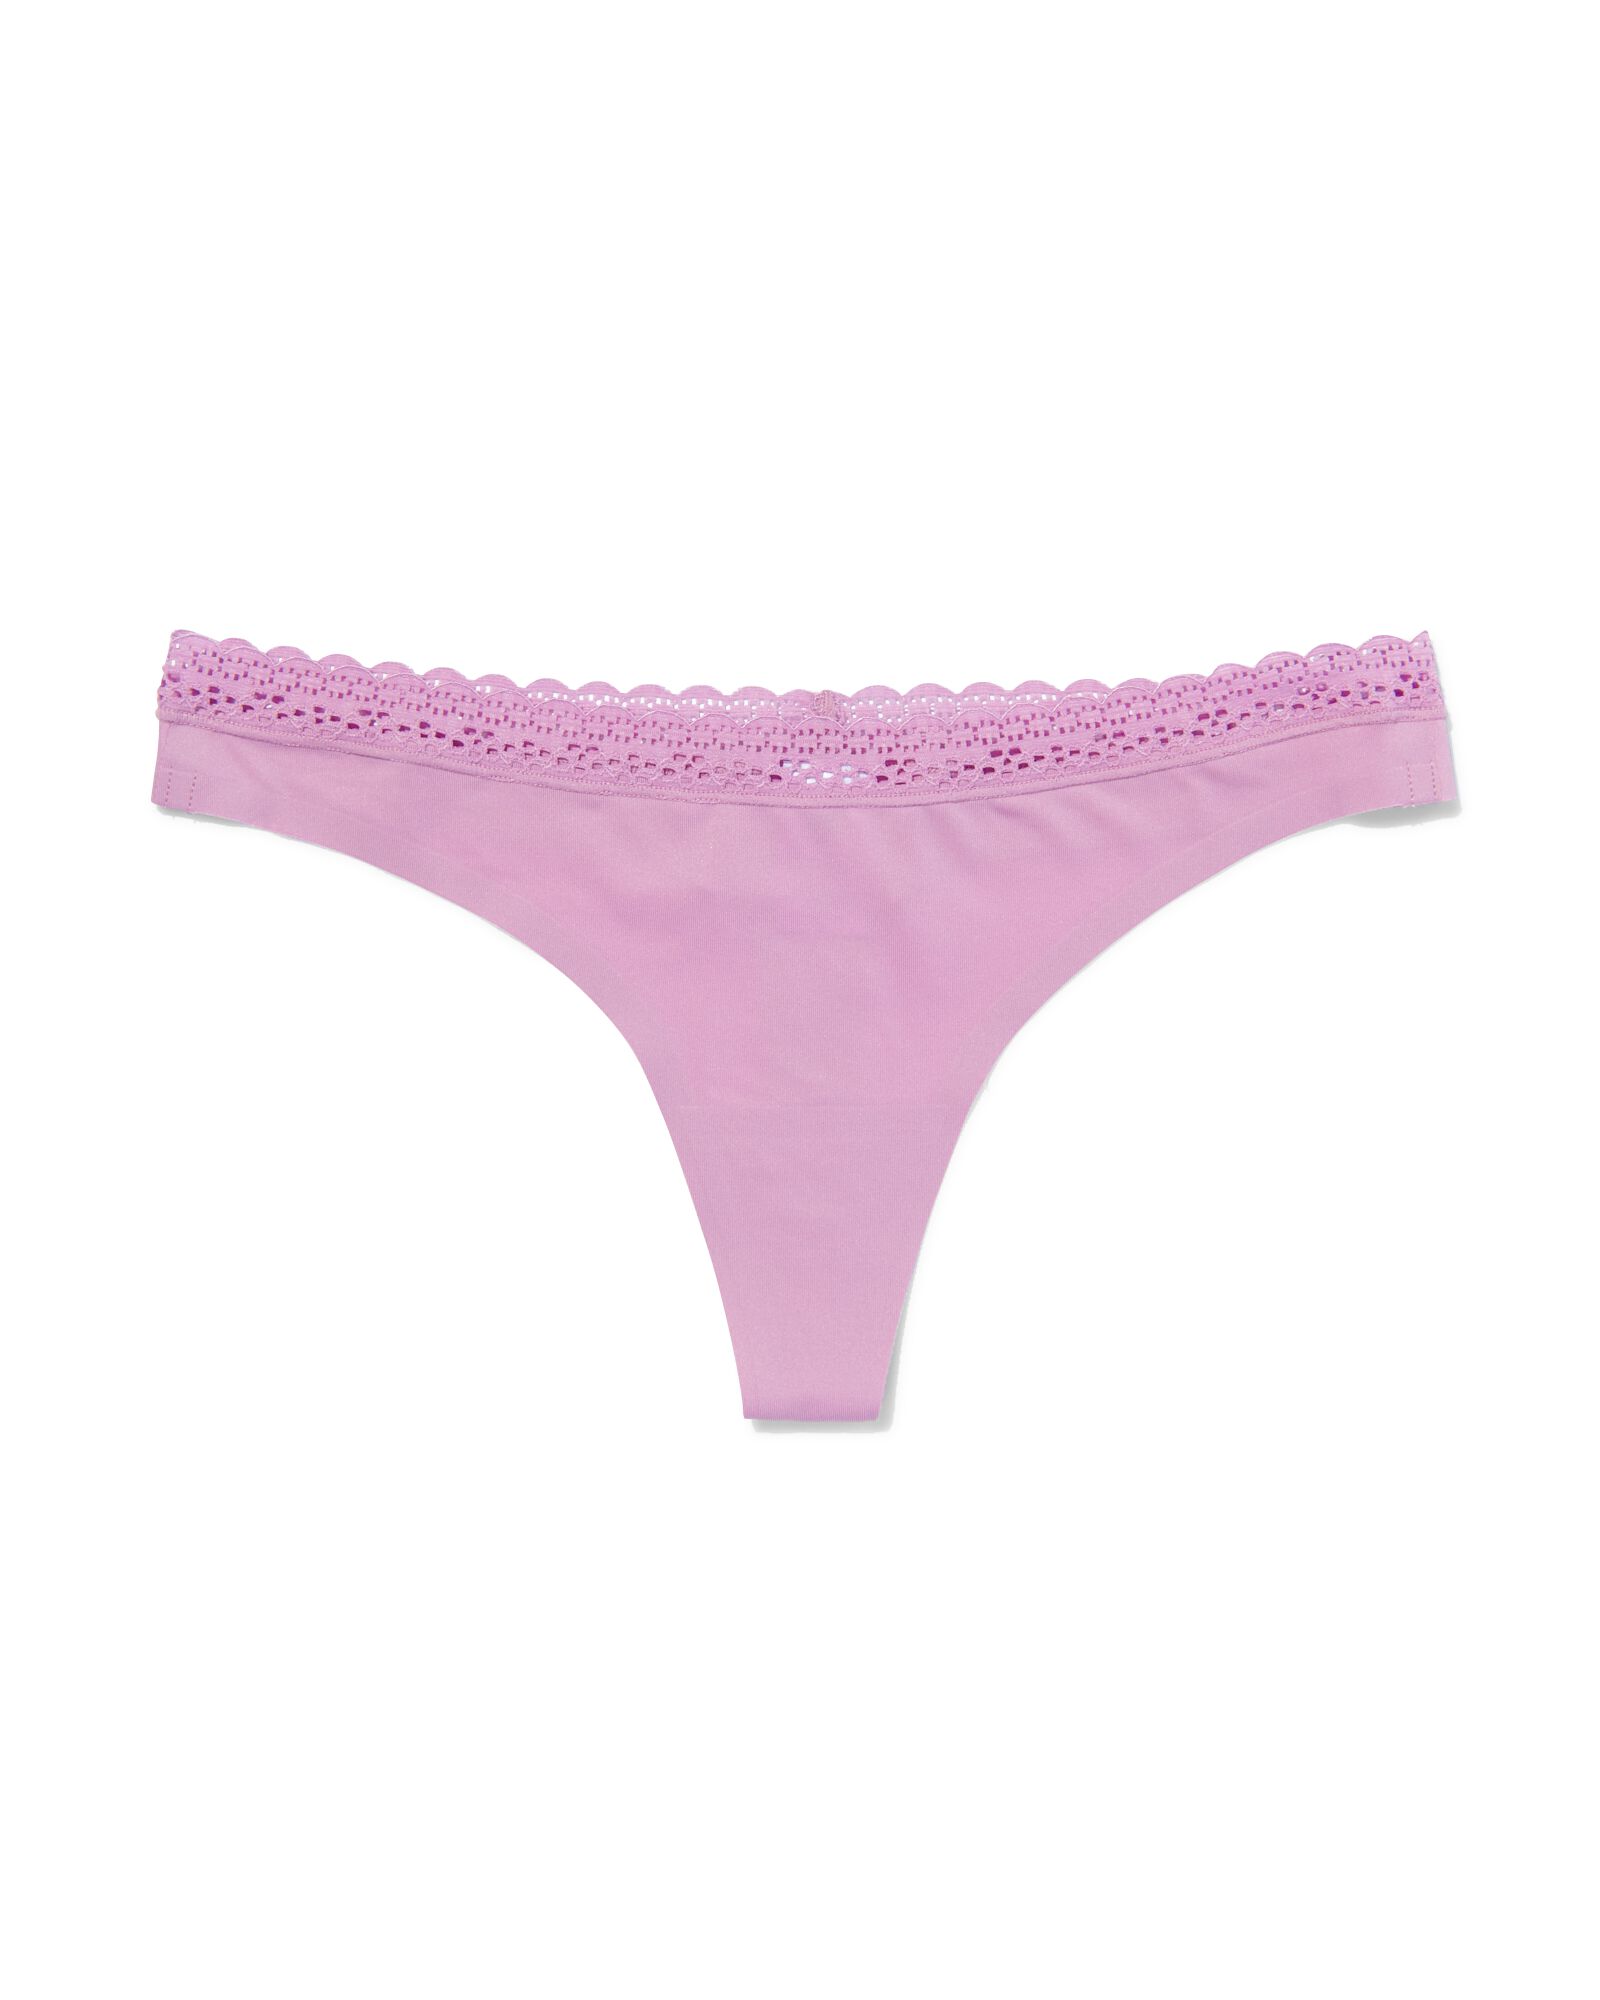 dames string second skin micro met kant roze roze - 19600364PINK - HEMA